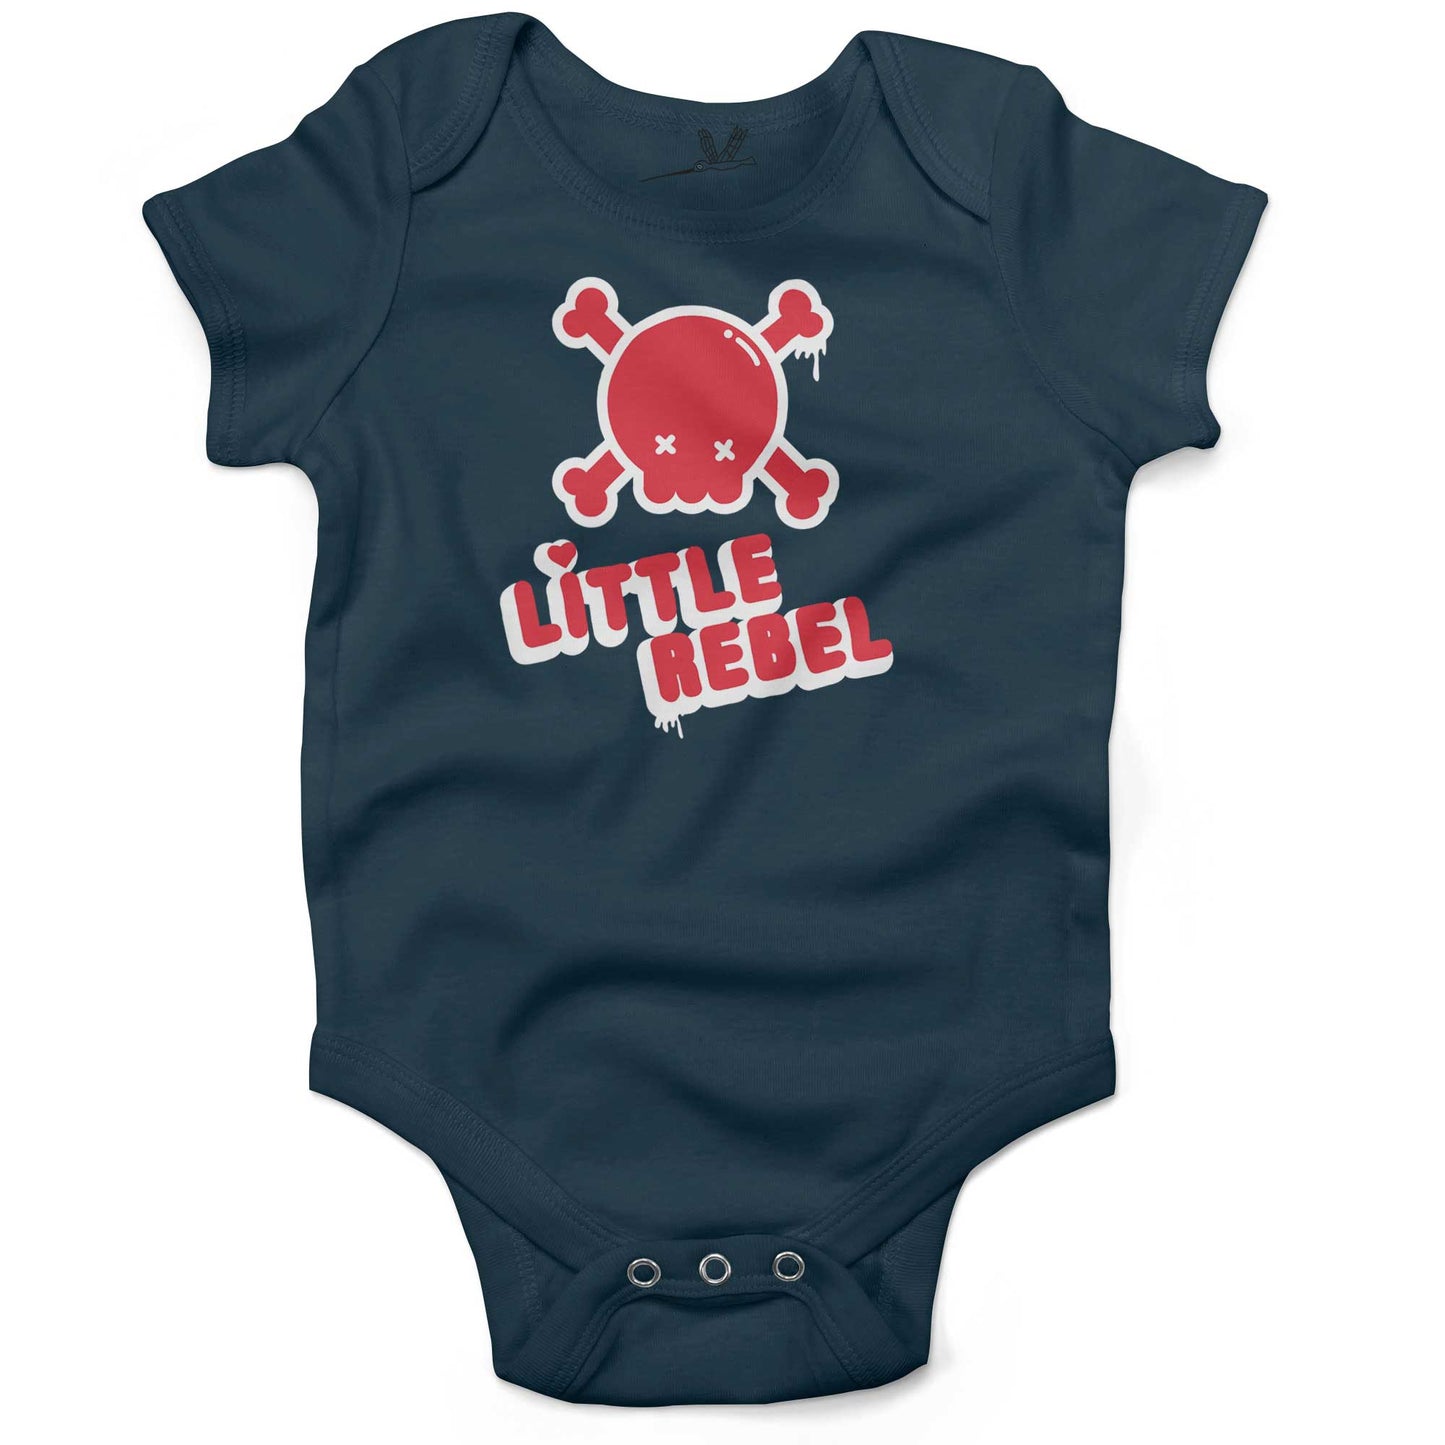 Little Rebel Infant Bodysuit or Raglan Baby Tee-Organic Pacific Blue-3-6 months